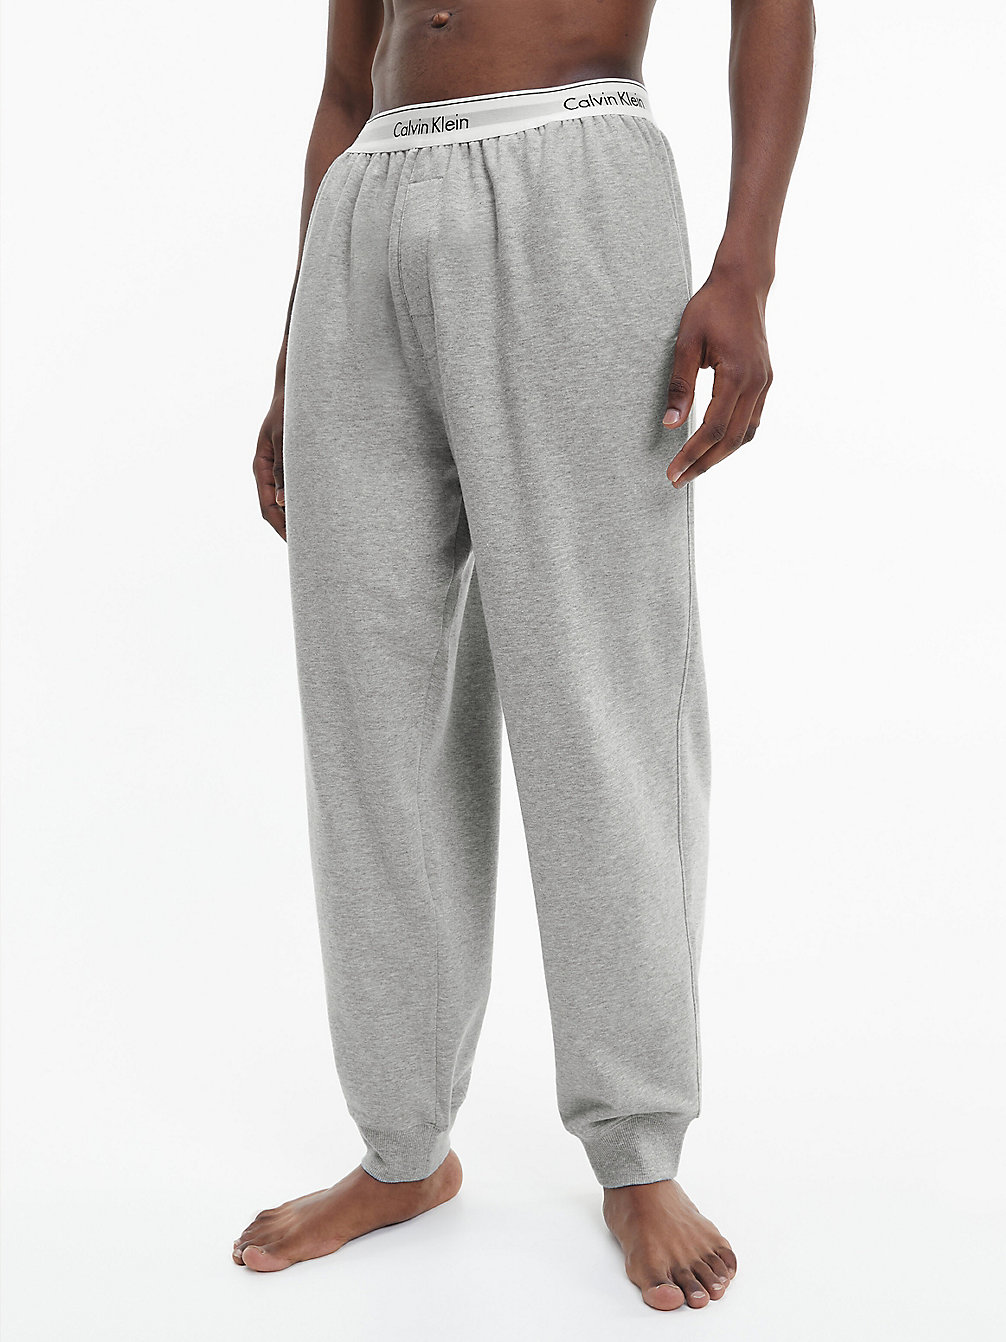 GREY HEATHER > Домашние тренировочные брюки - Modern Cotton > undefined женщины - Calvin Klein